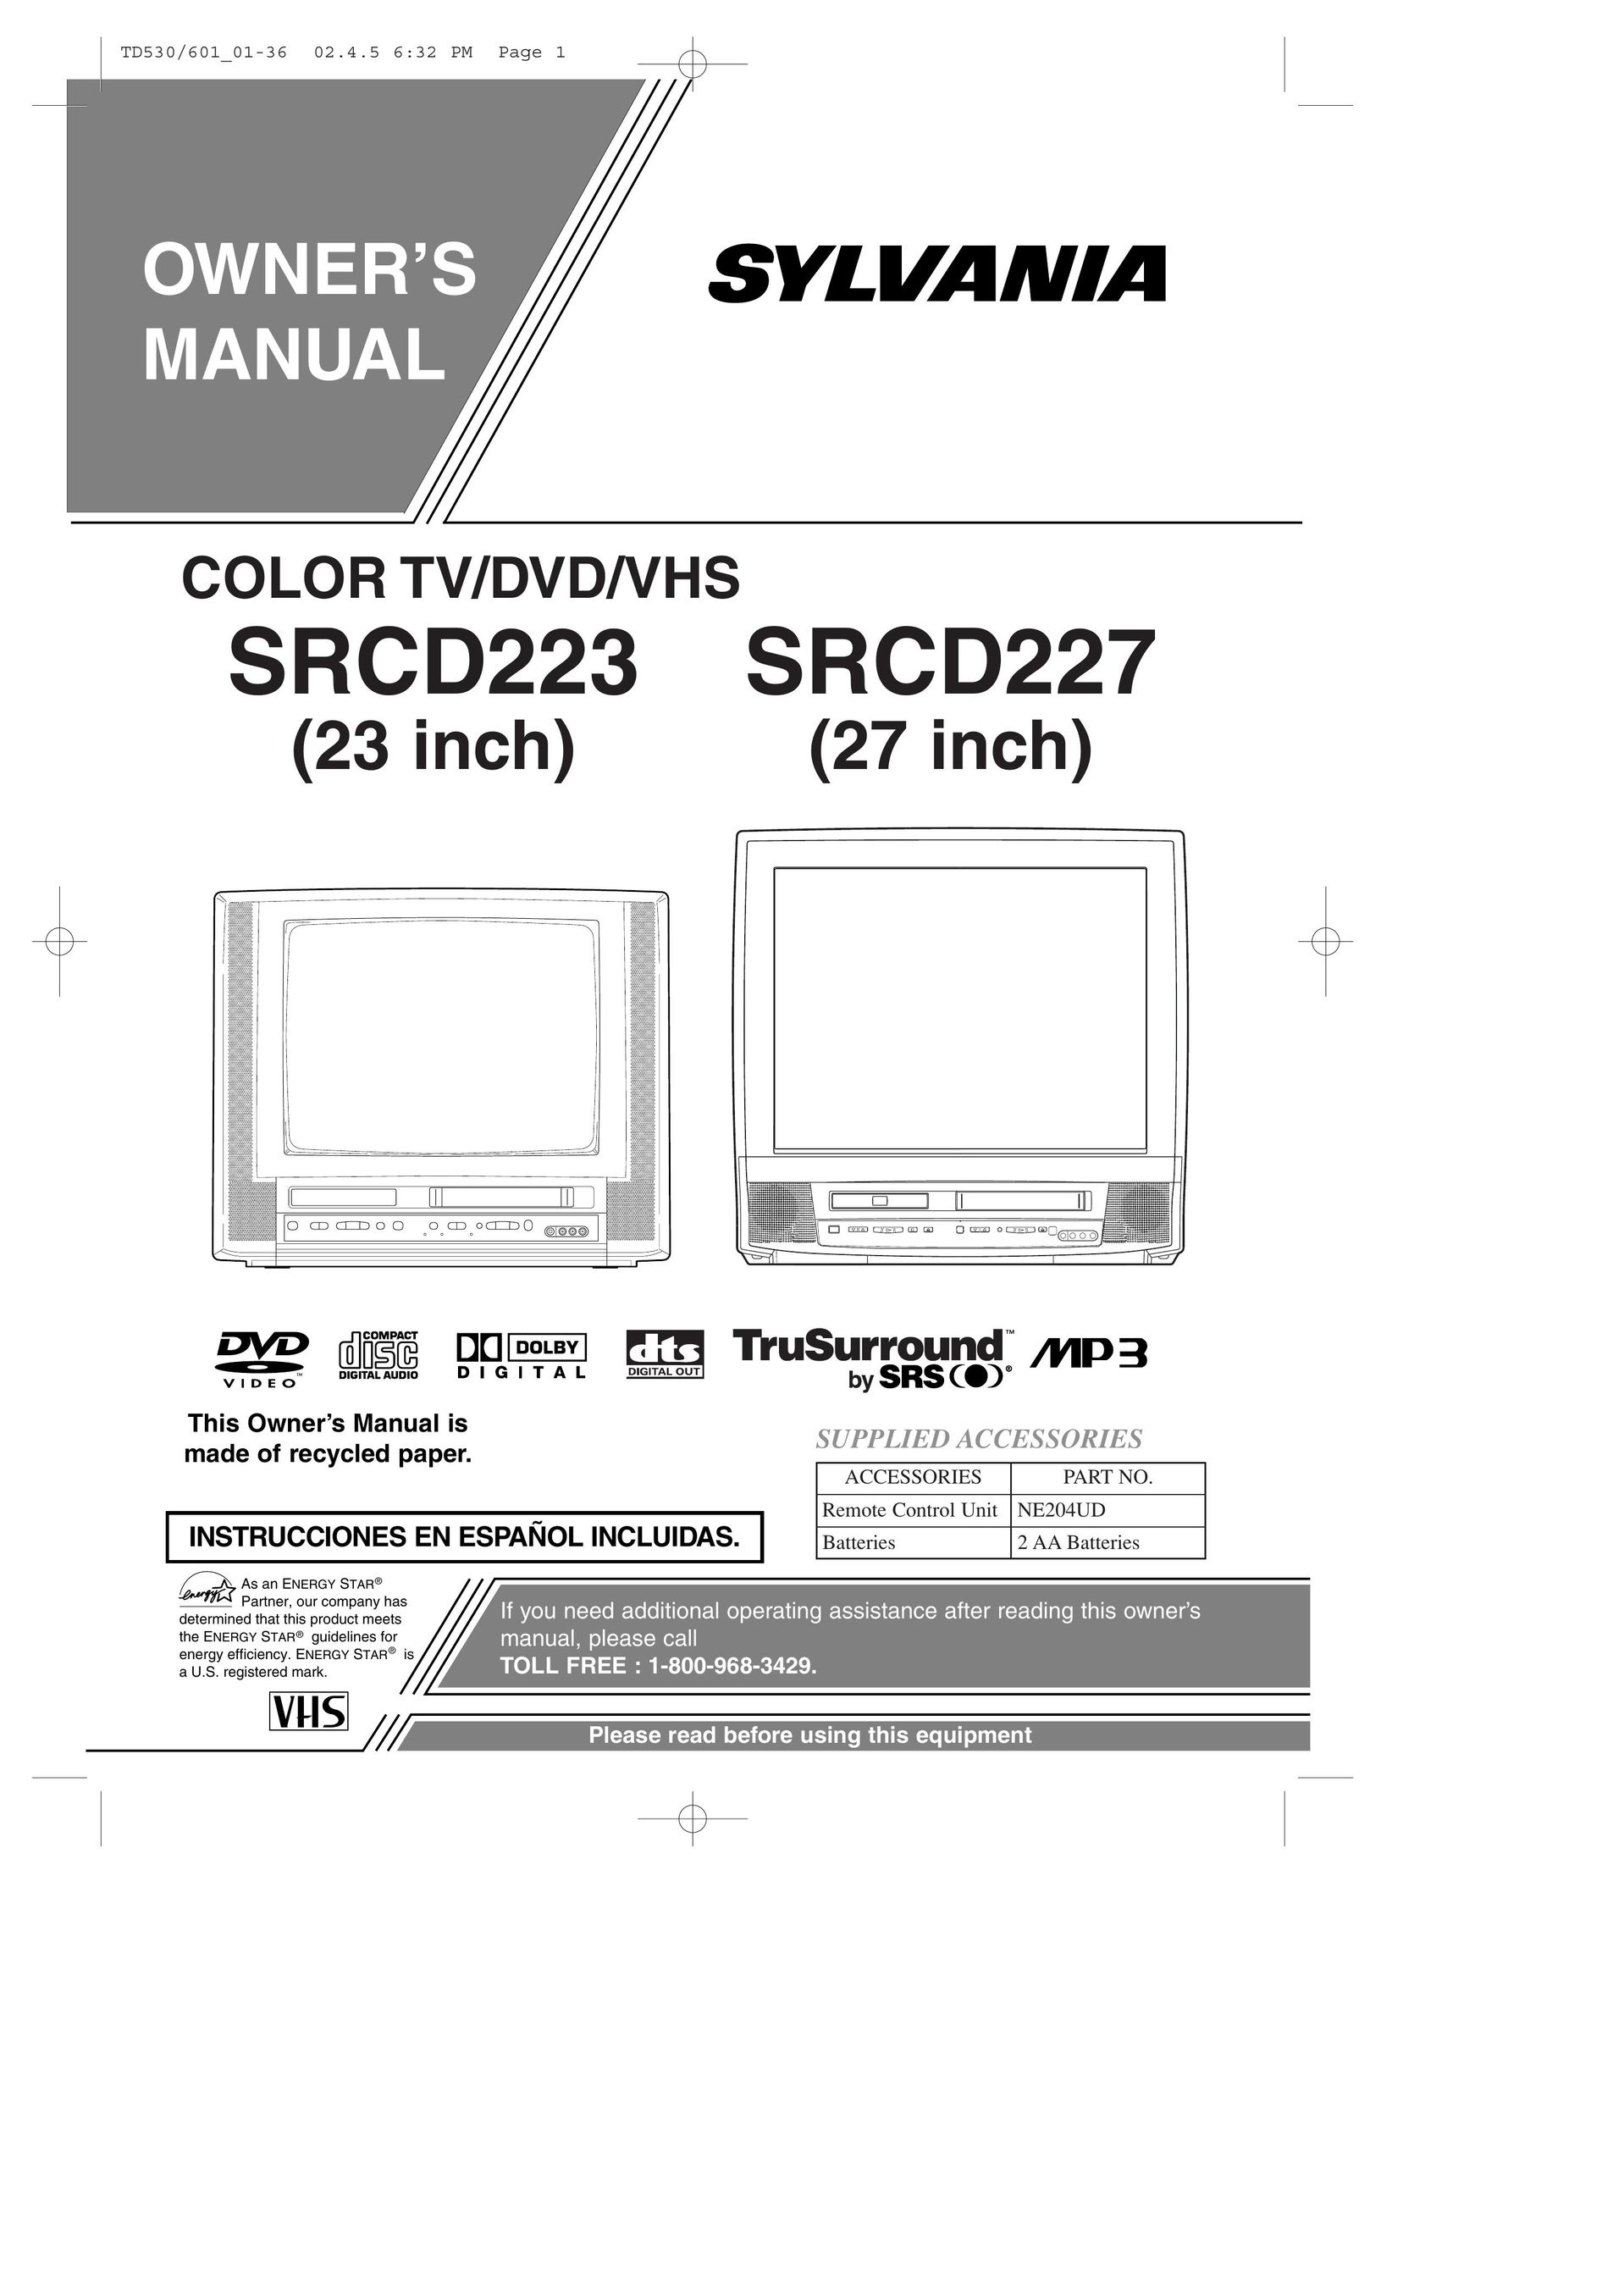 Sears SRCD223 TV DVD Combo User Manual